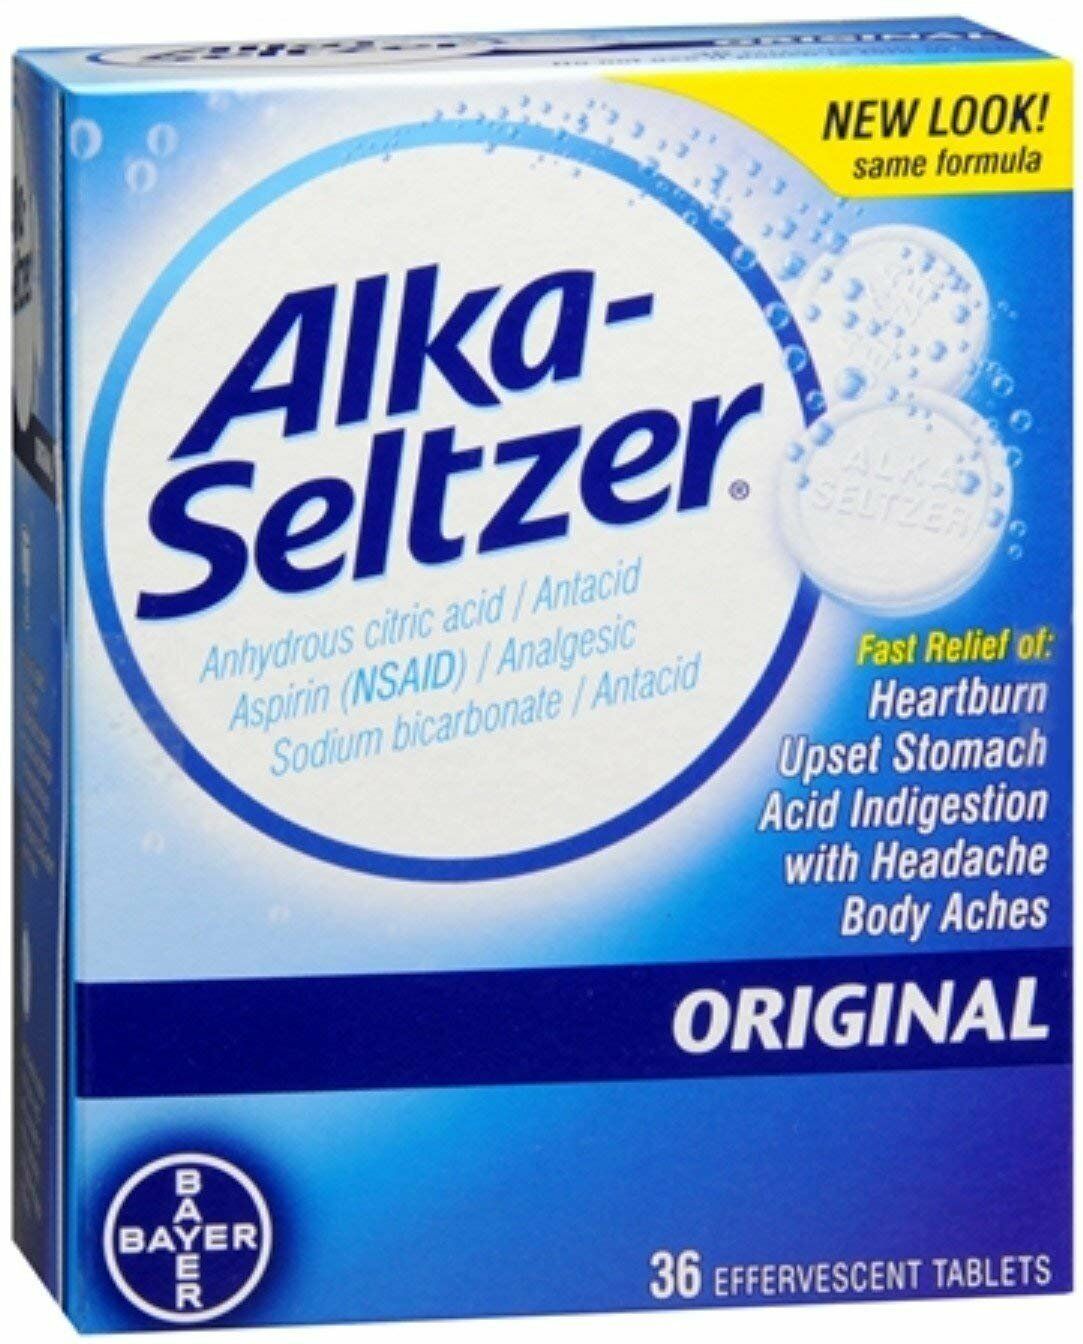 Alka-Seltzer Antacid Aspirin Analgesic Effervescent Tablet, 36 Ct, 2 Pack - image 1 of 4